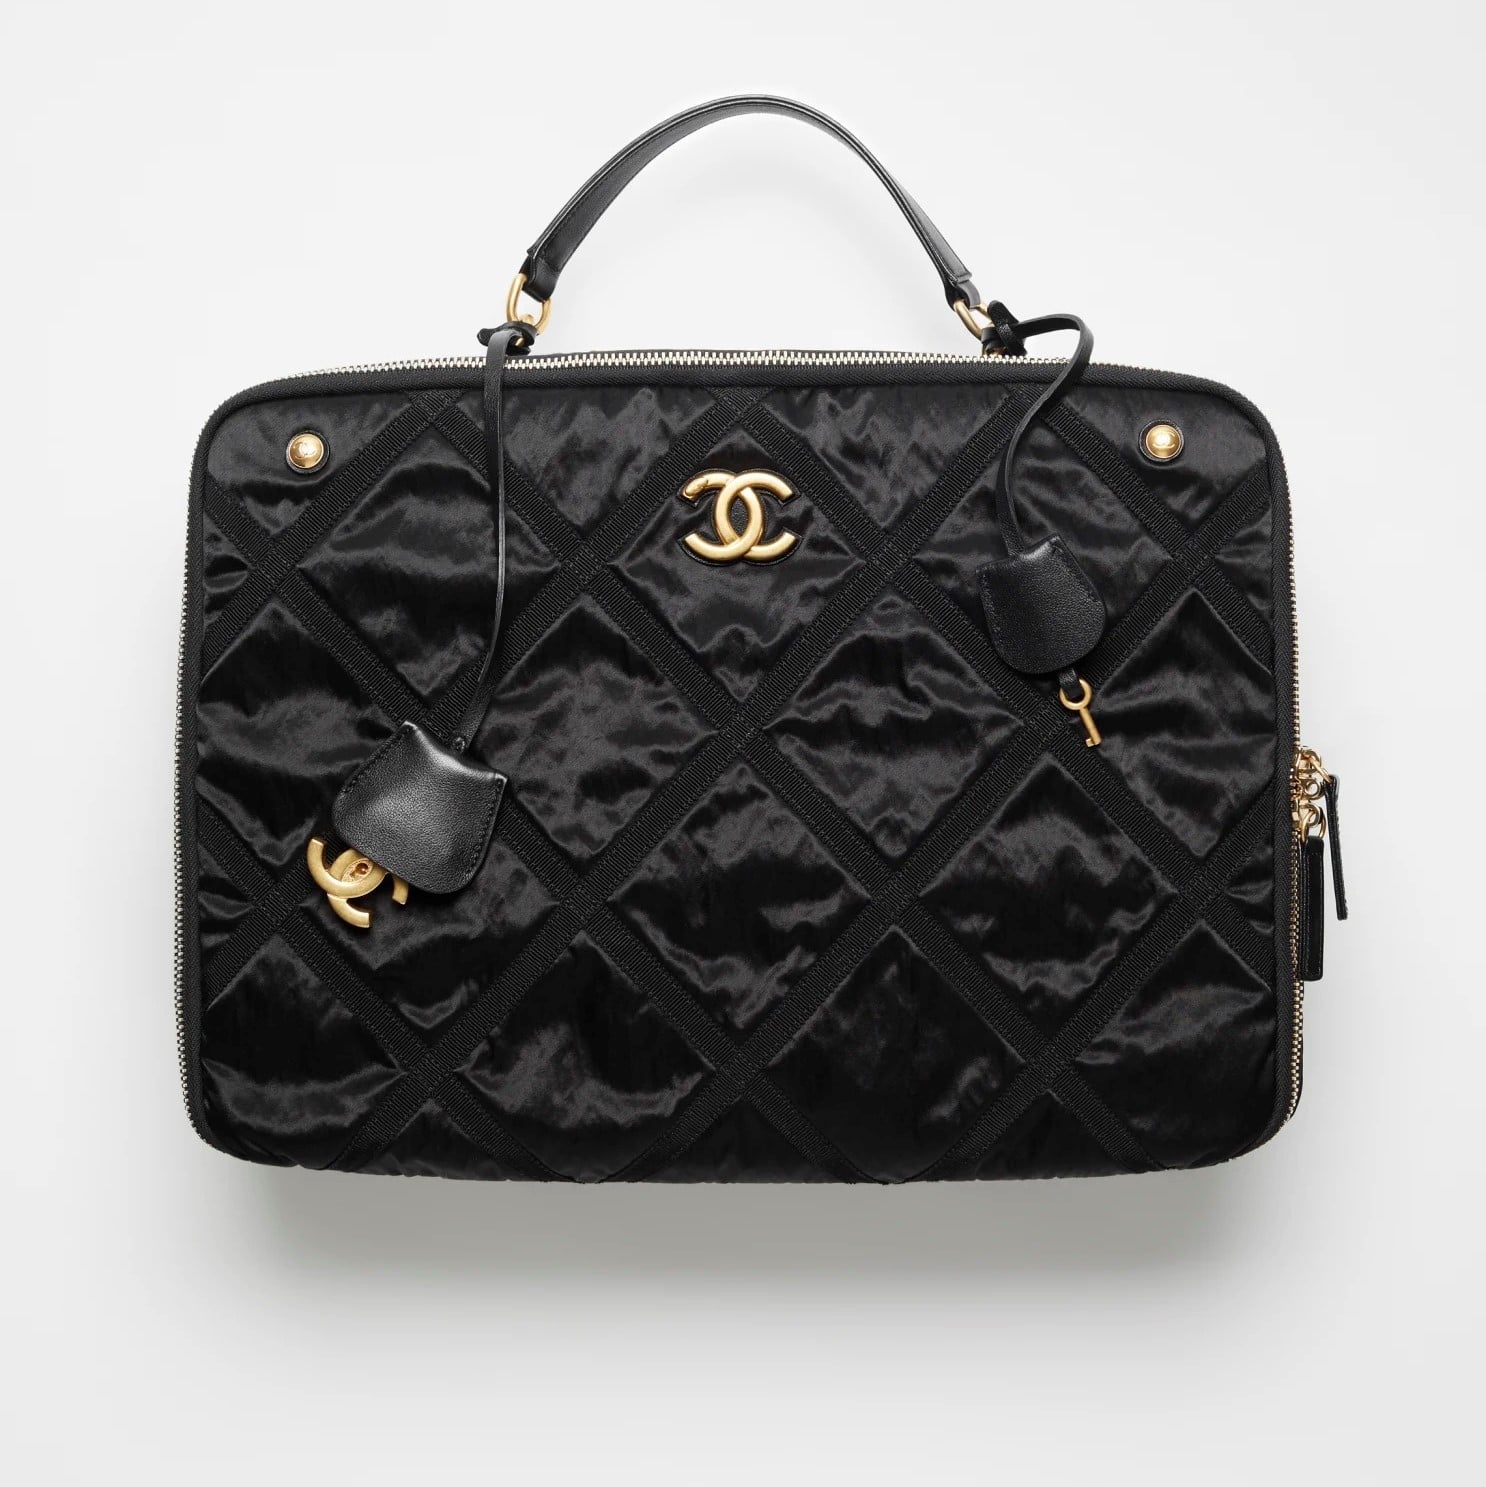 Chanel Luggage  The RealReal